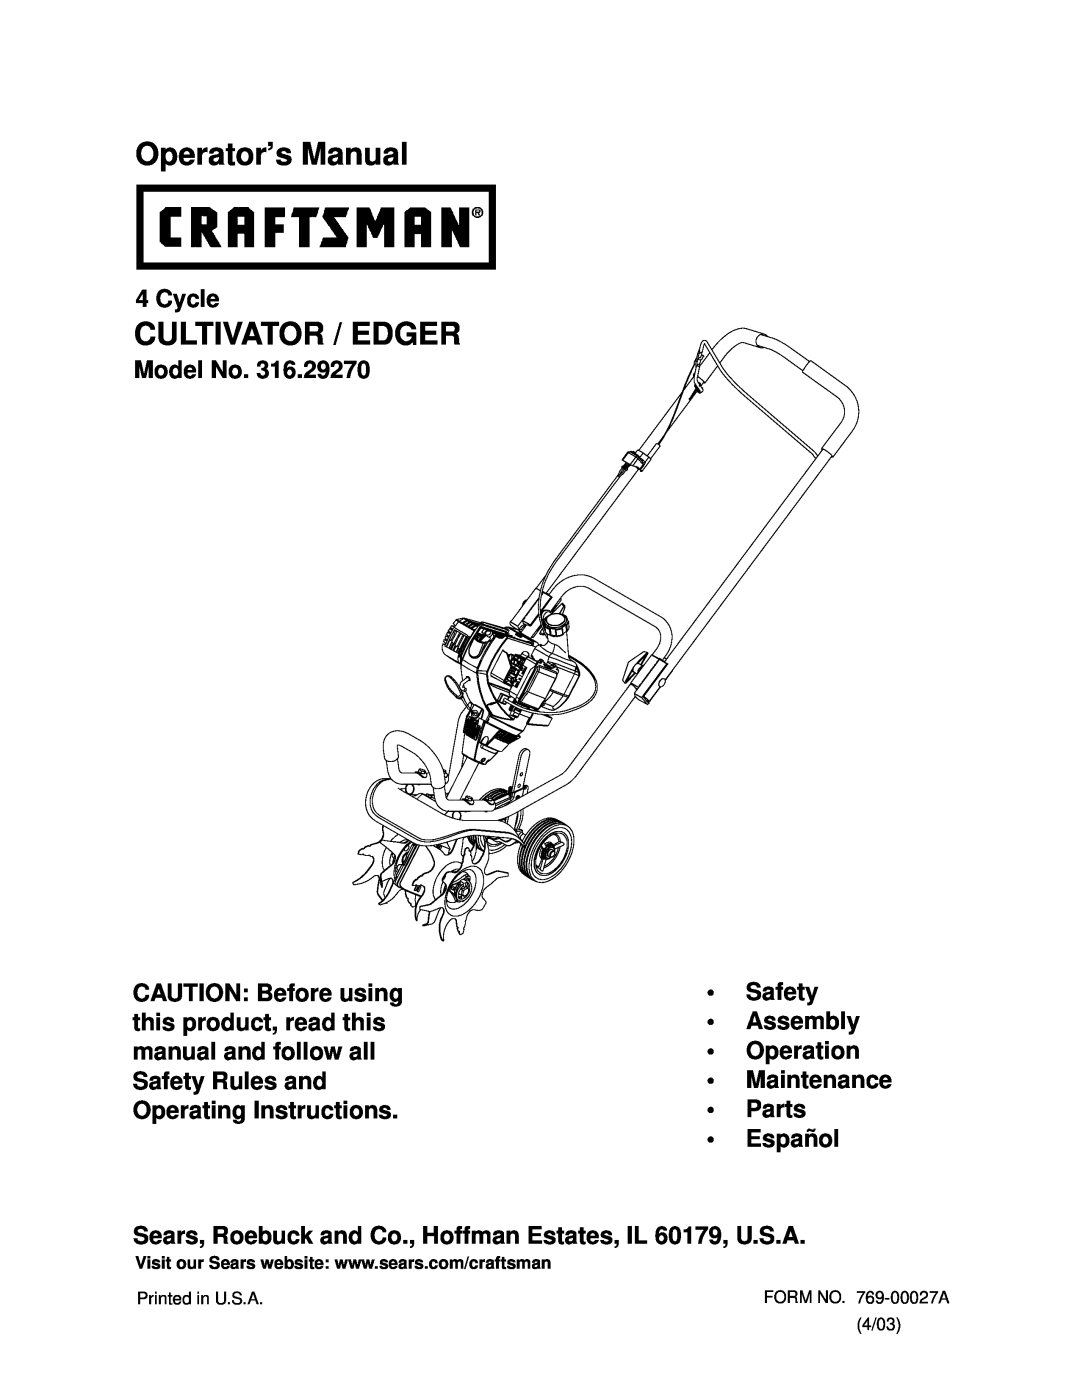 Craftsman 316.2927 manual Cycle, Model No, Safety Assembly Operation Maintenance Parts Español, Operator’s Manual 